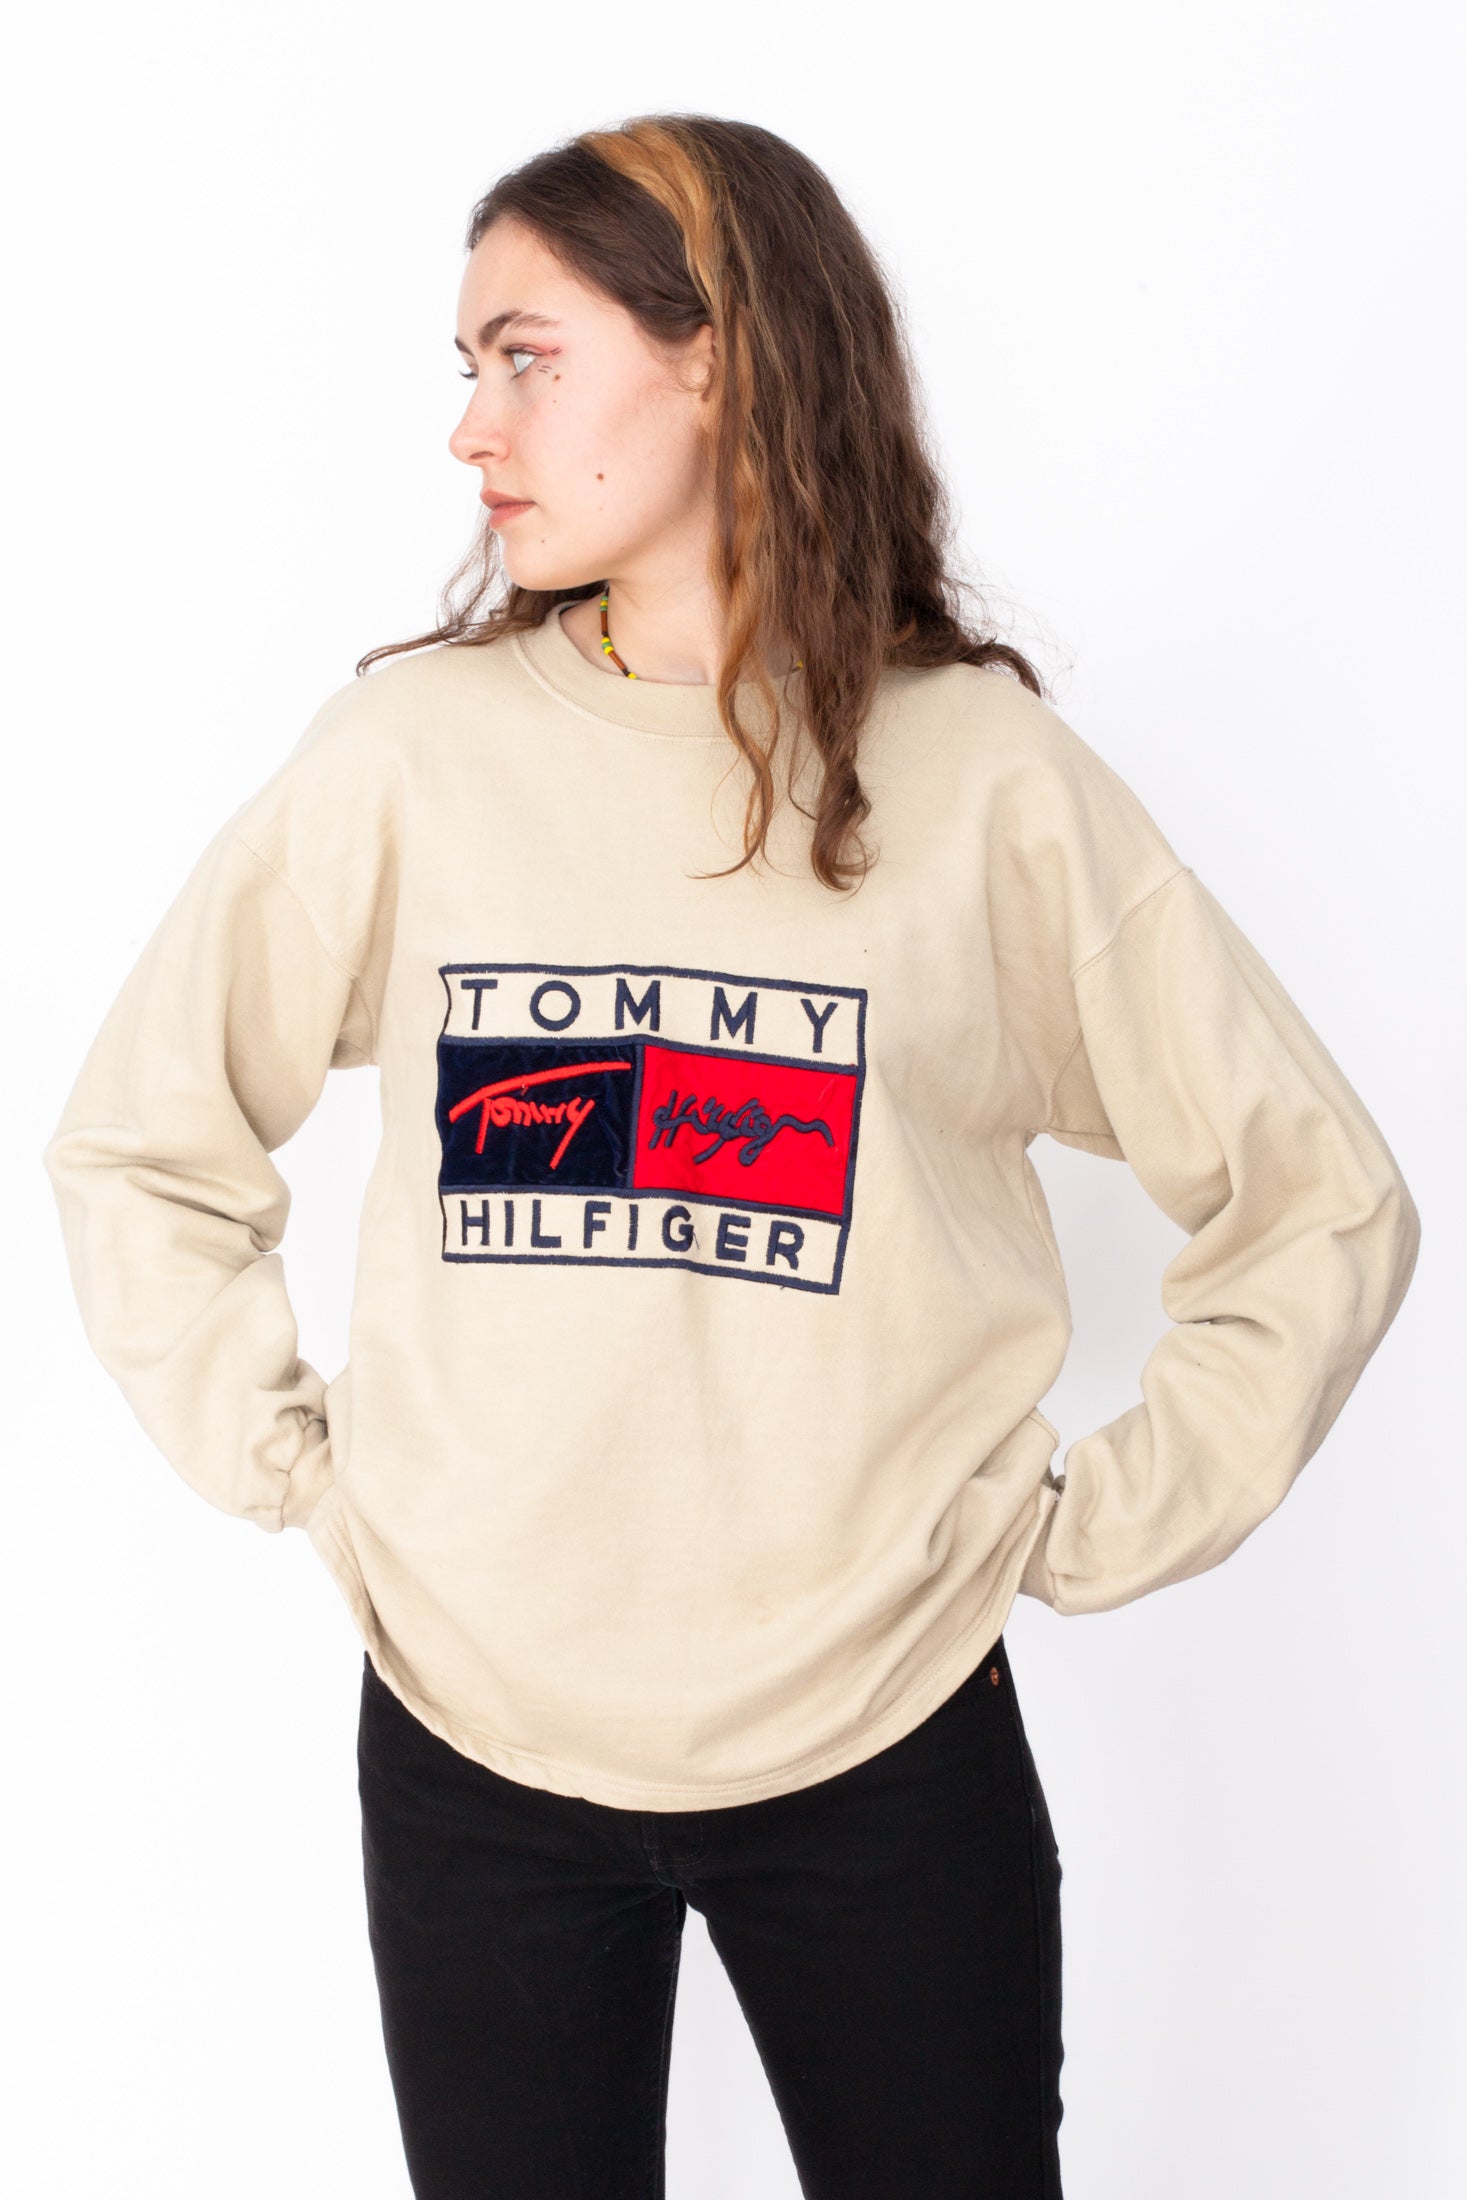 Not RARE Tommy Sweet – Sweatshirt Too Logo Big Hilfiger 90s Vintage